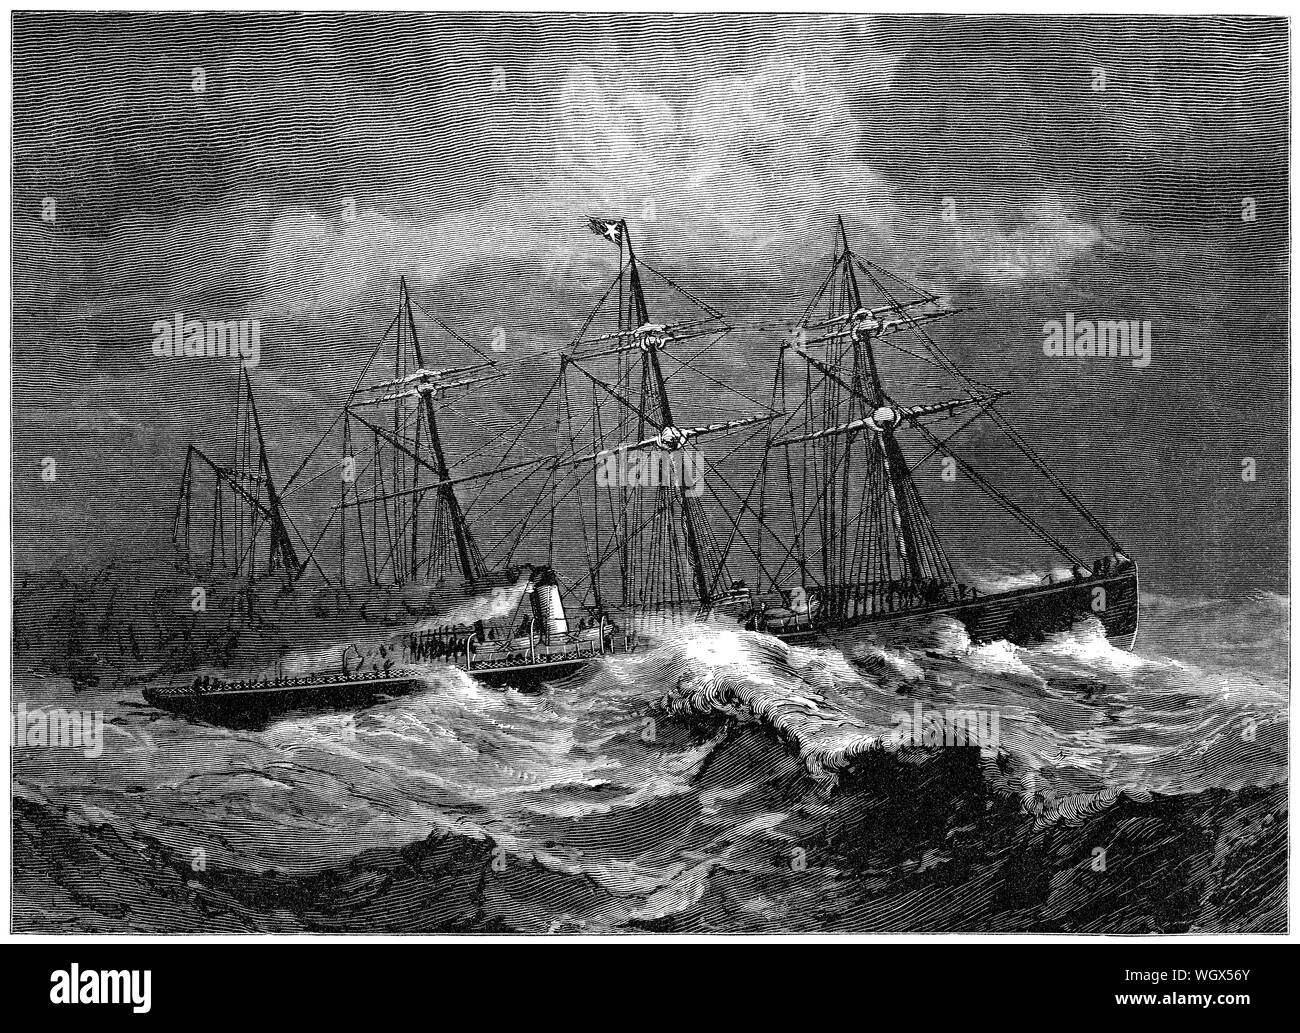 c1876 engraving of the White Star Line ocean liner SS Celtic in heavy seas. Stock Photo